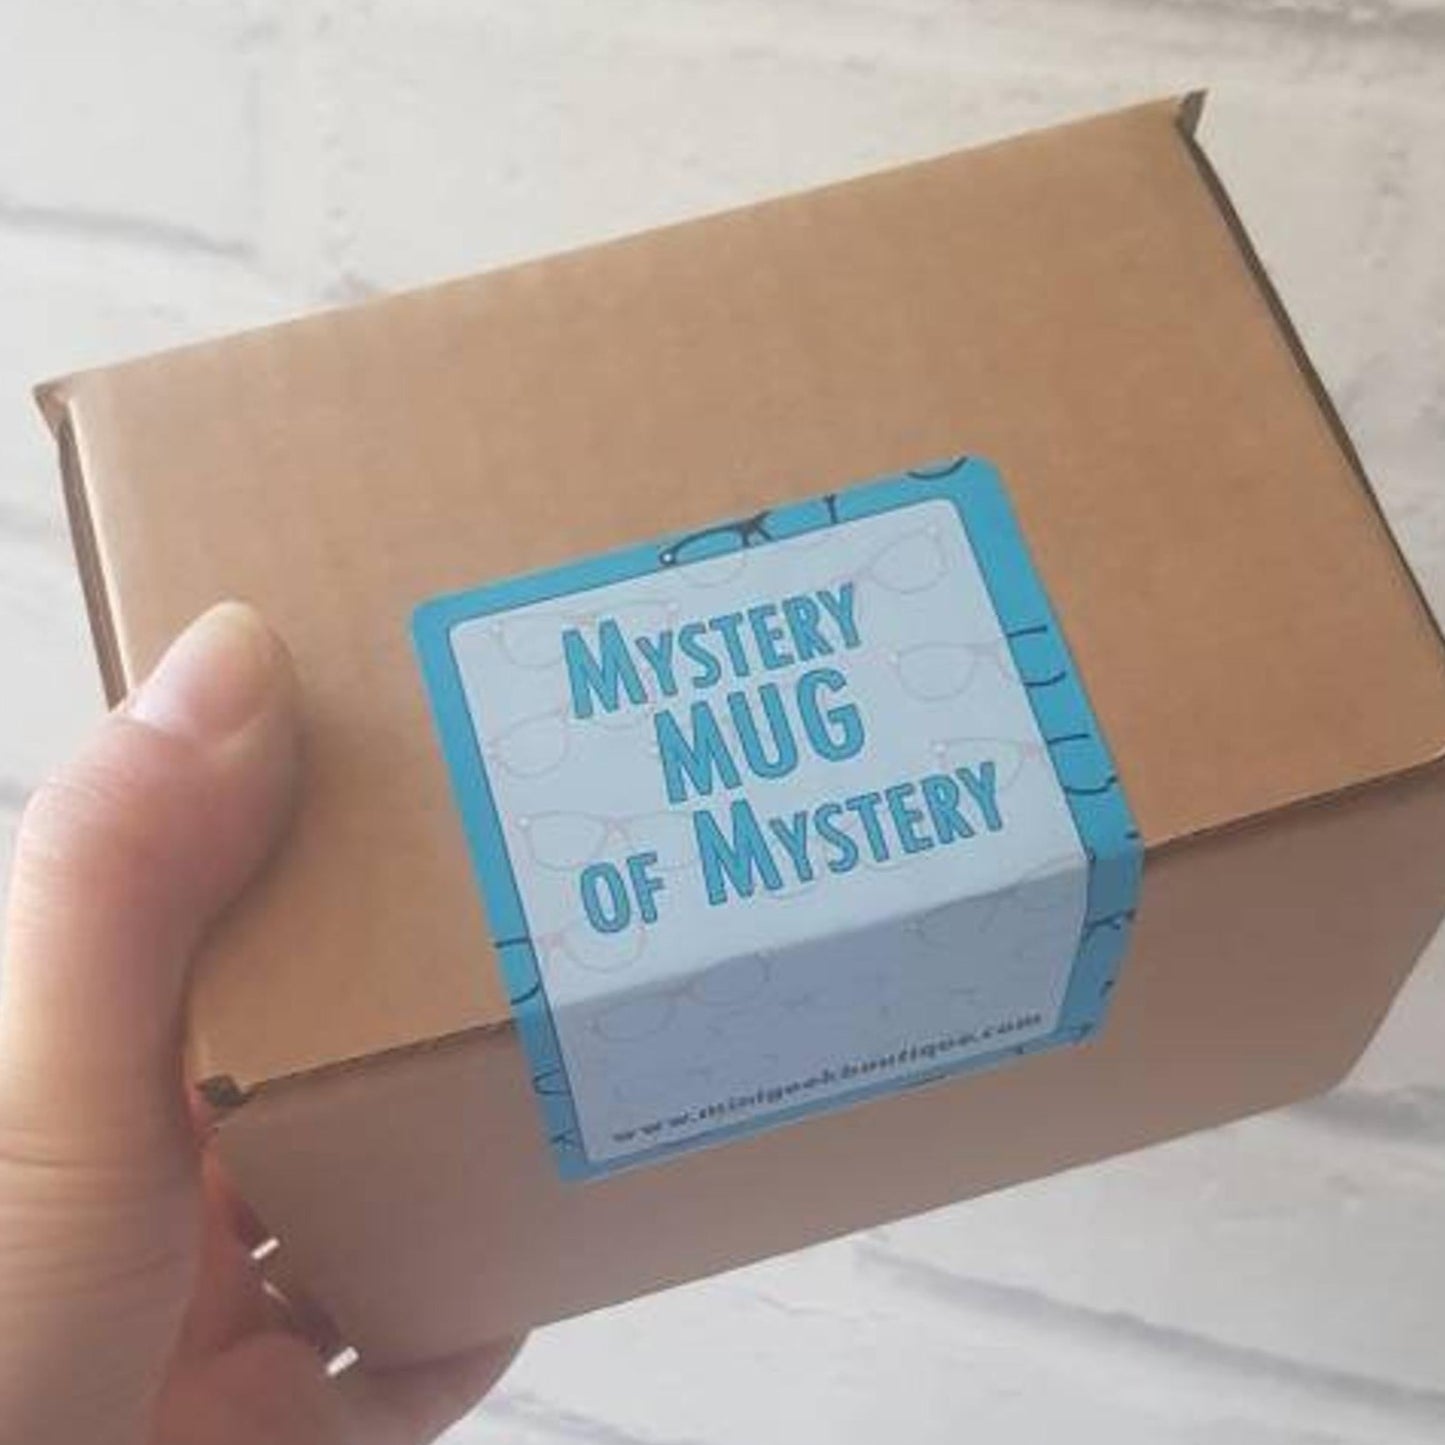 Mystery mug of mystery